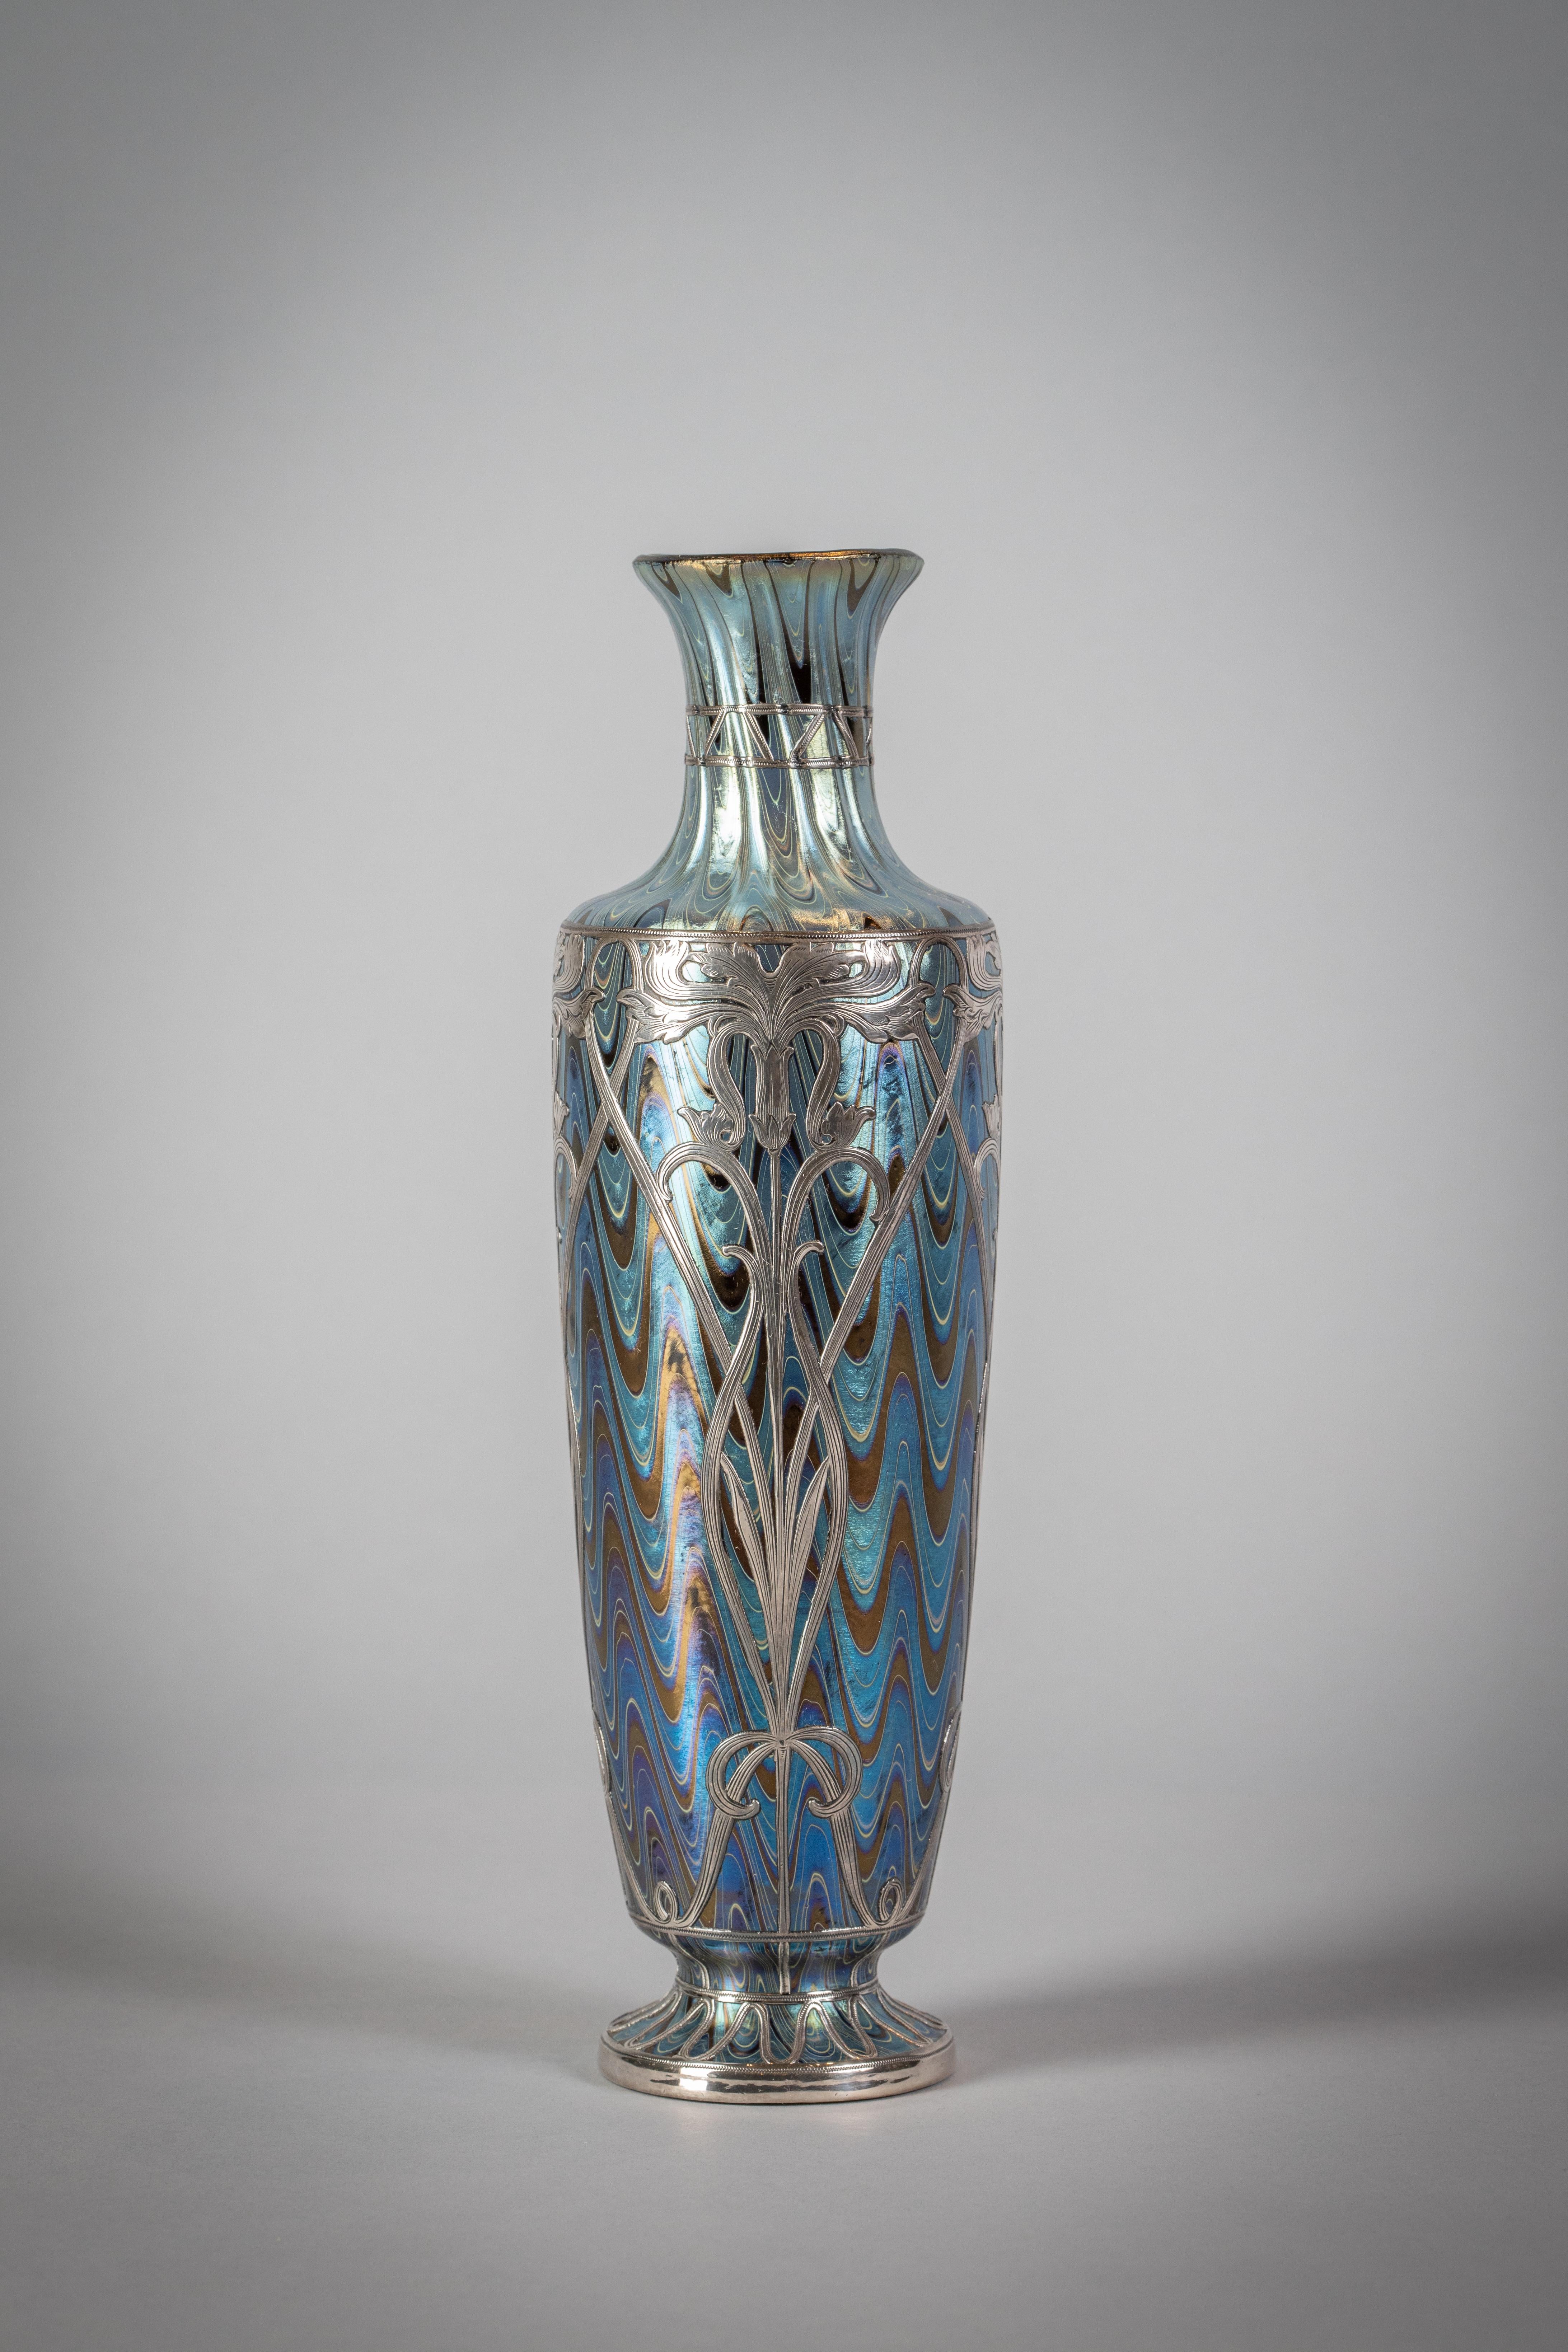 Loetz silver overlay glass vase, circa 1910. Signed 'Loetz Austria'.